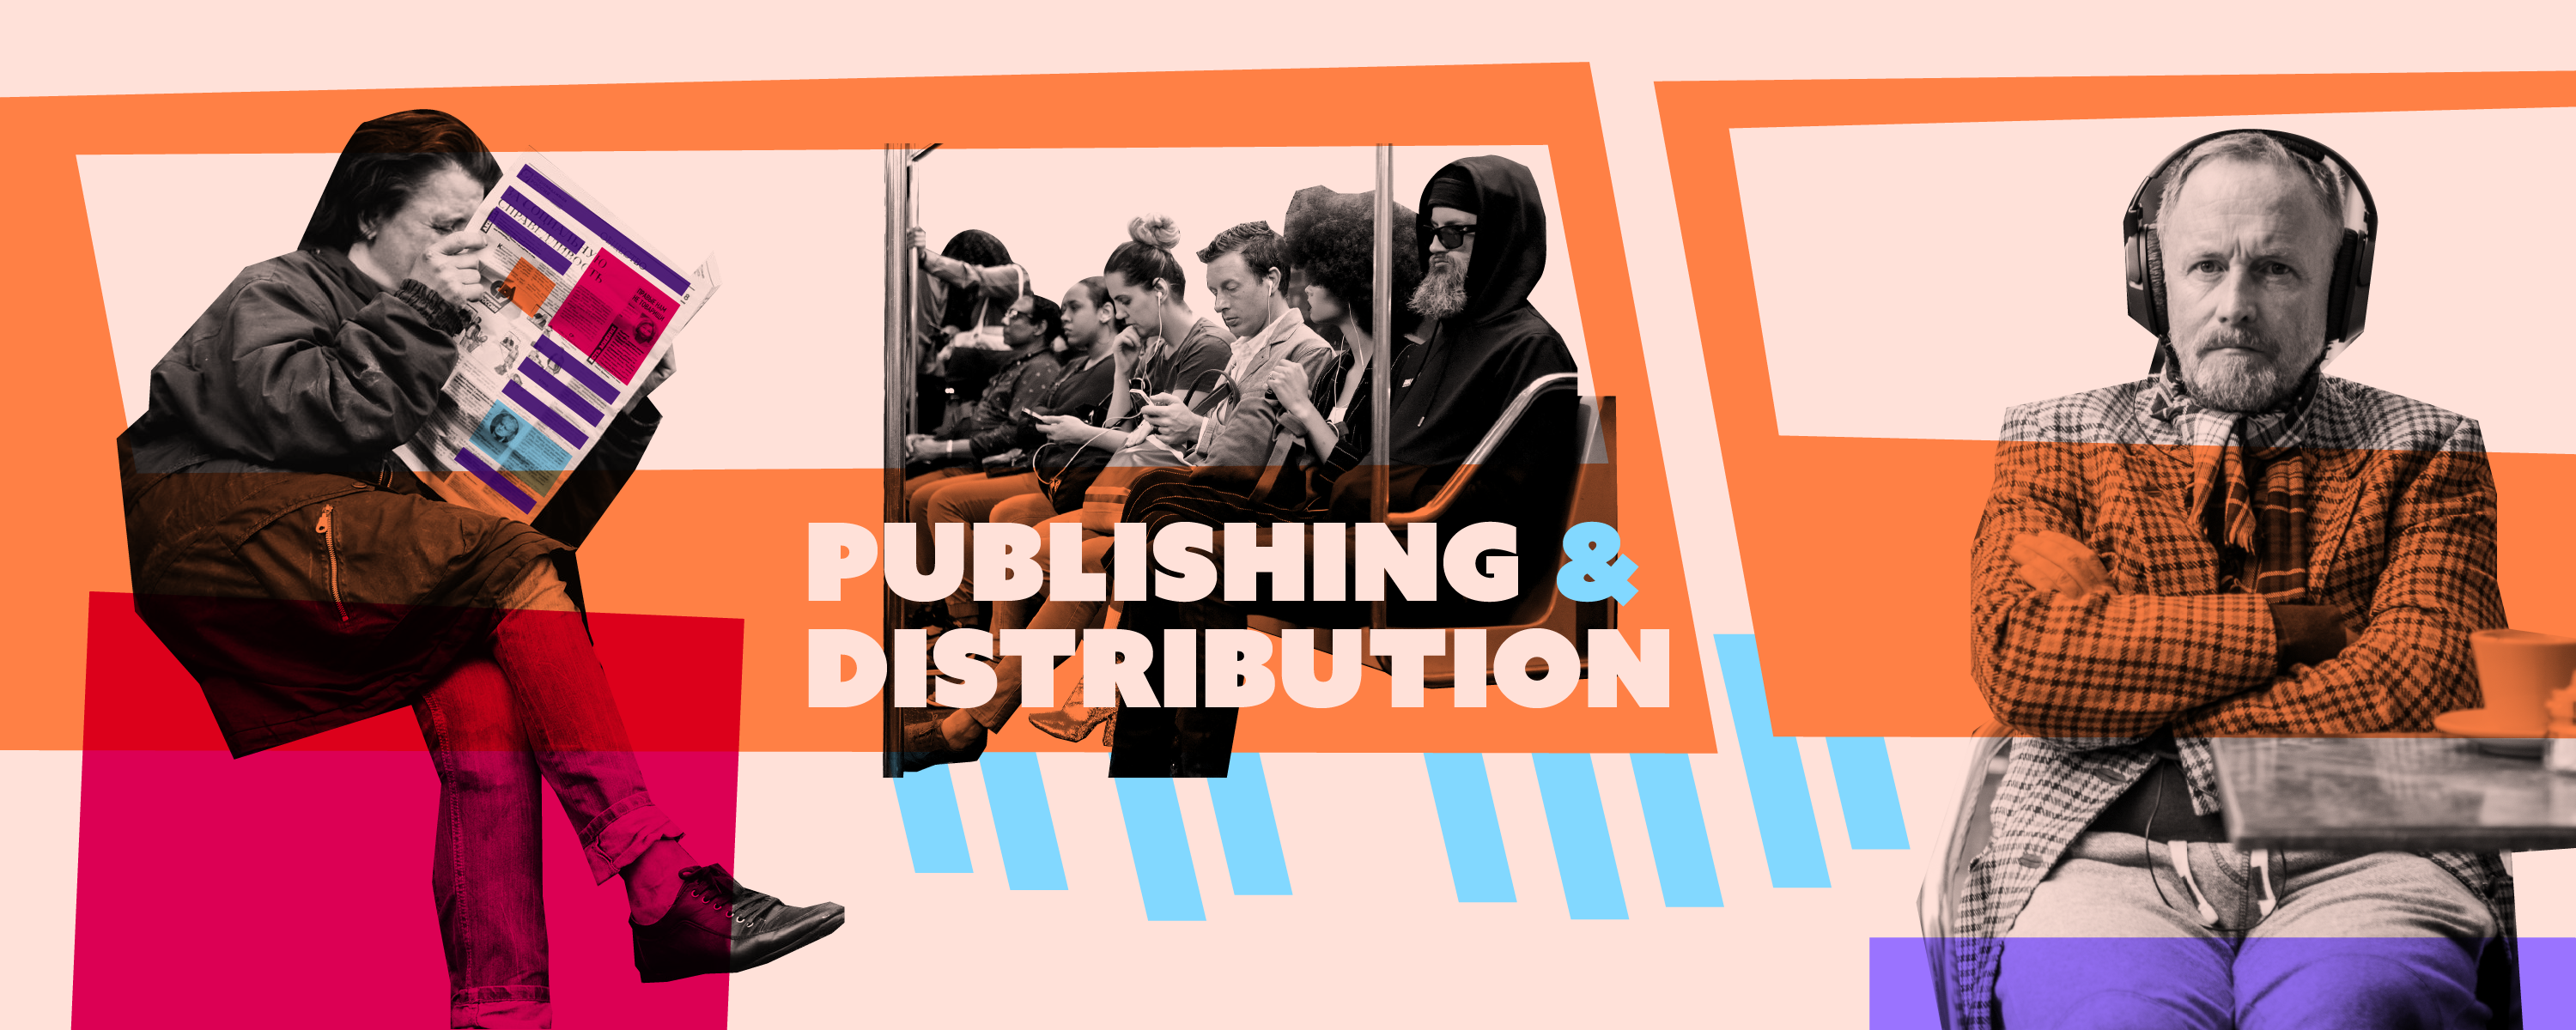 Publishing and distribution